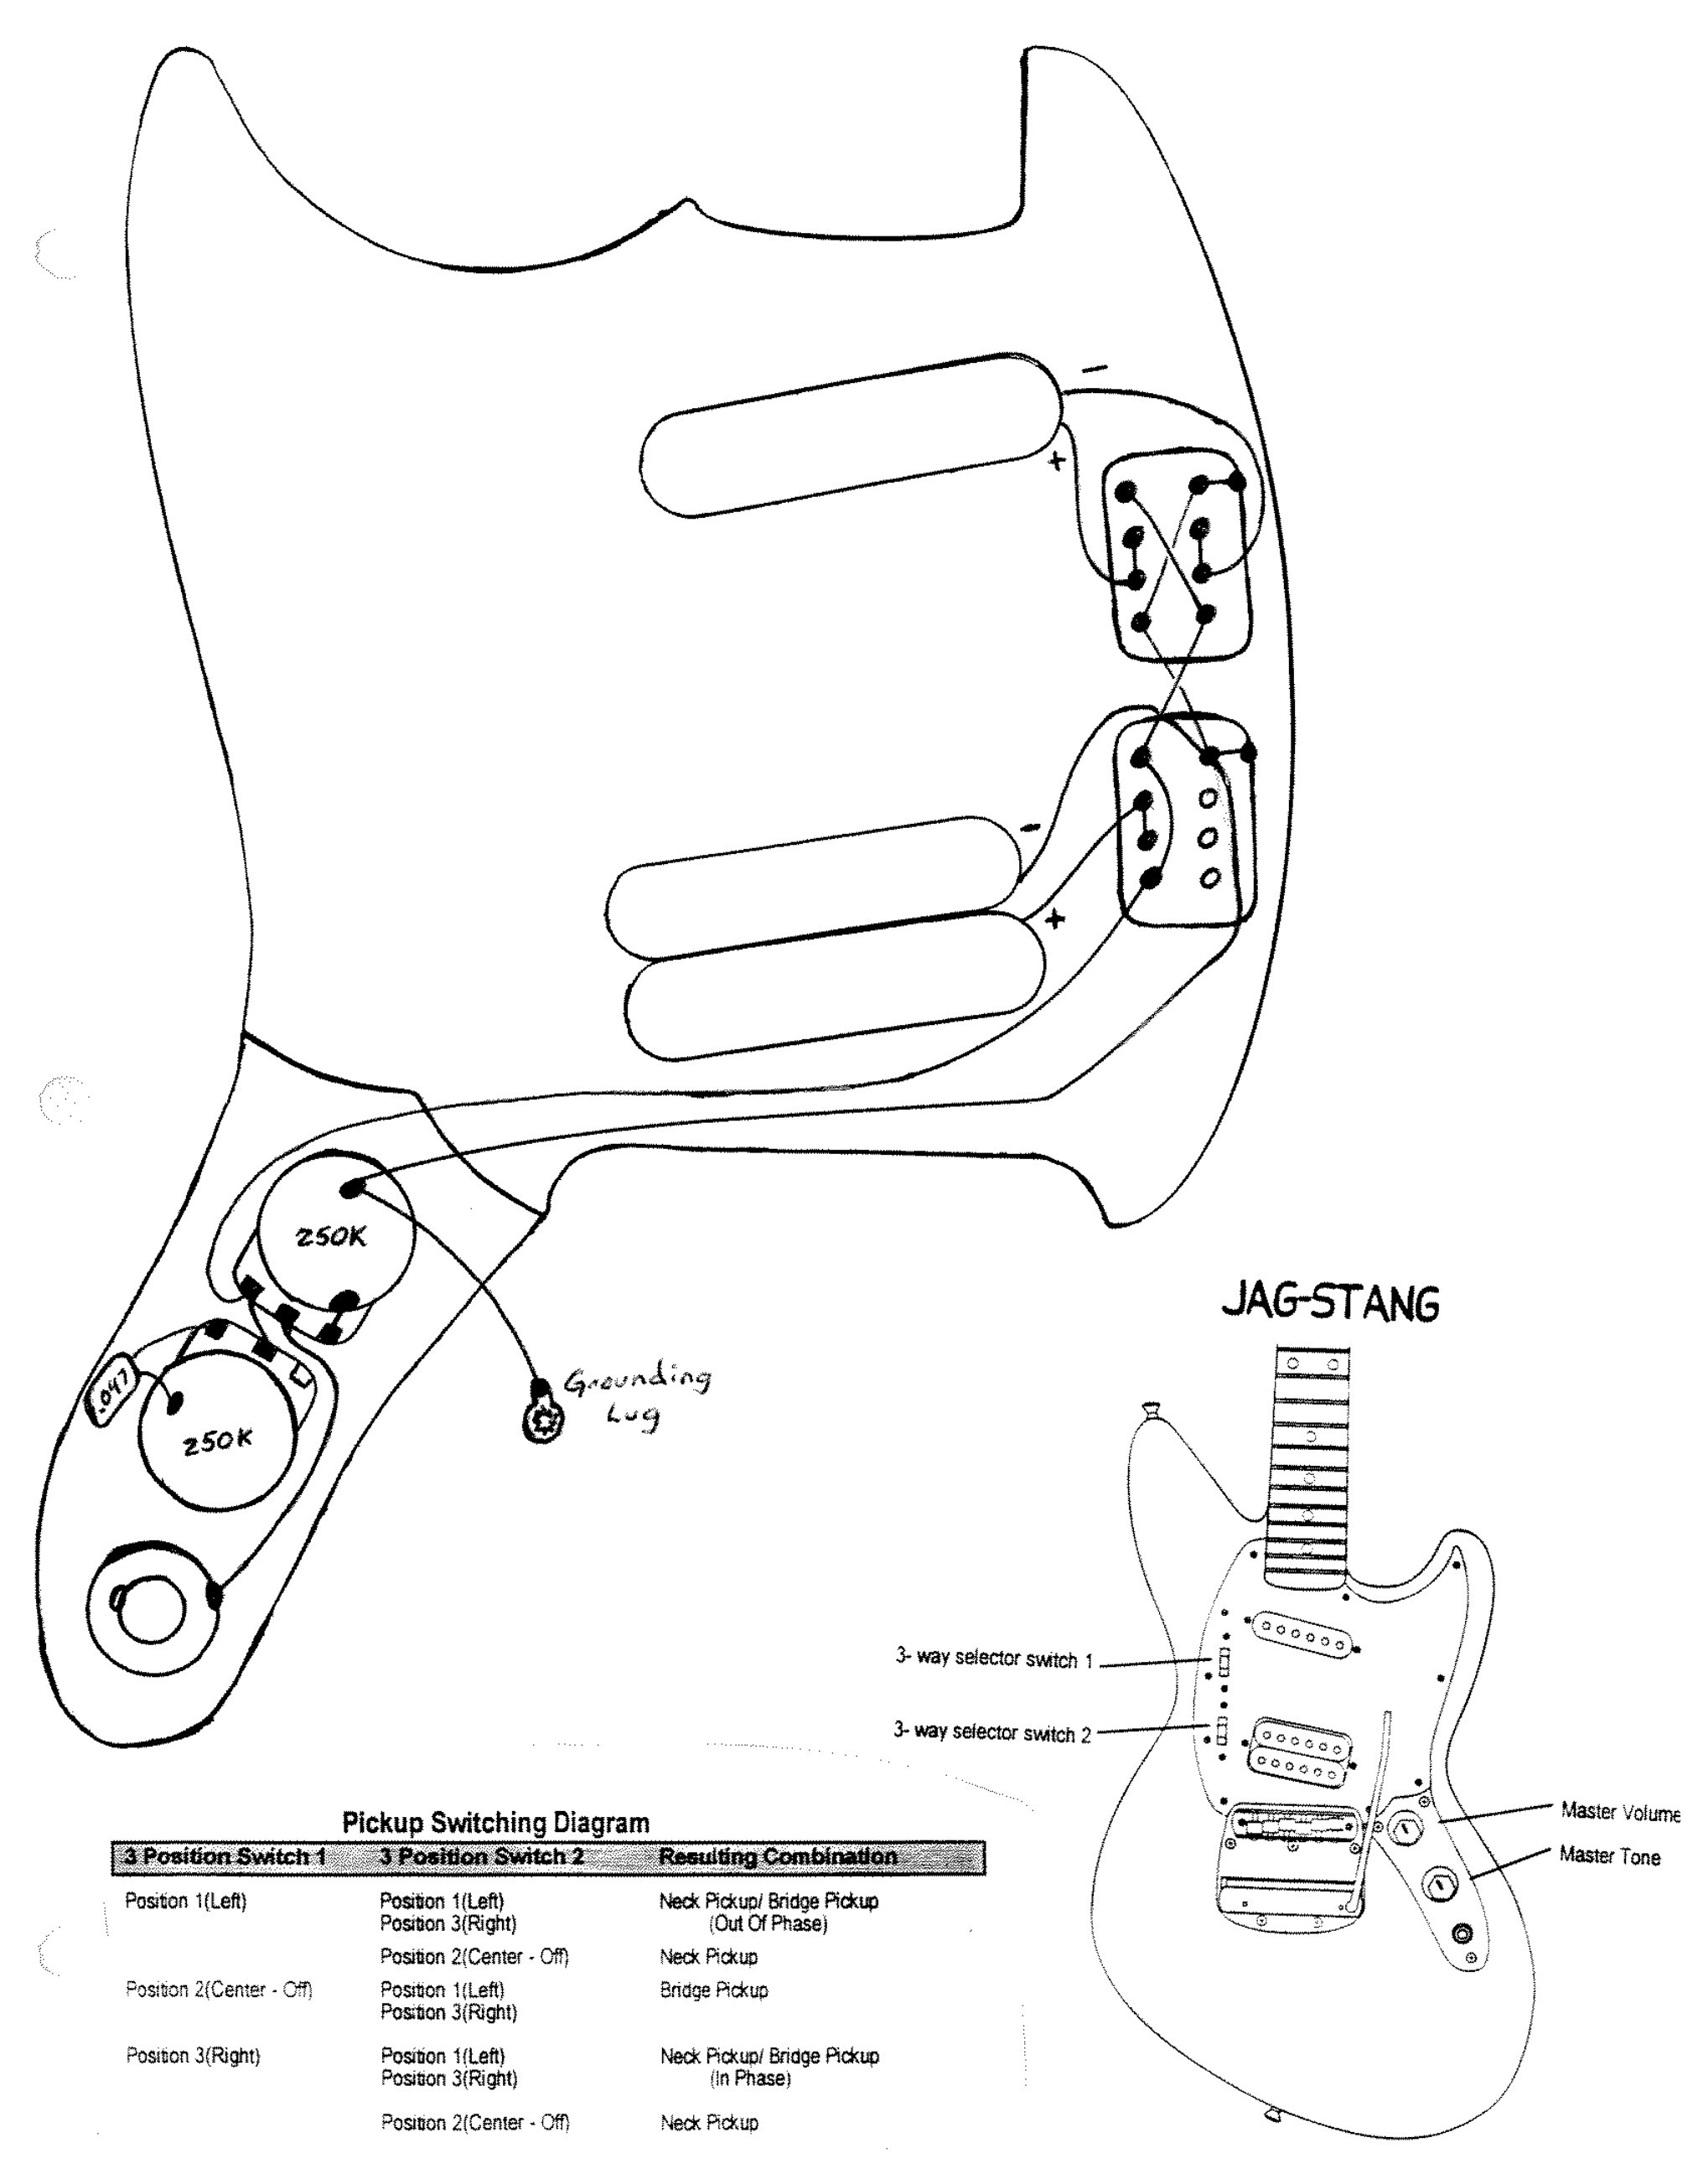 Wiring Diagram Fender Mustang Guitar Free Downloads Mustang Guitar - Fender Mustang Wiring Diagram